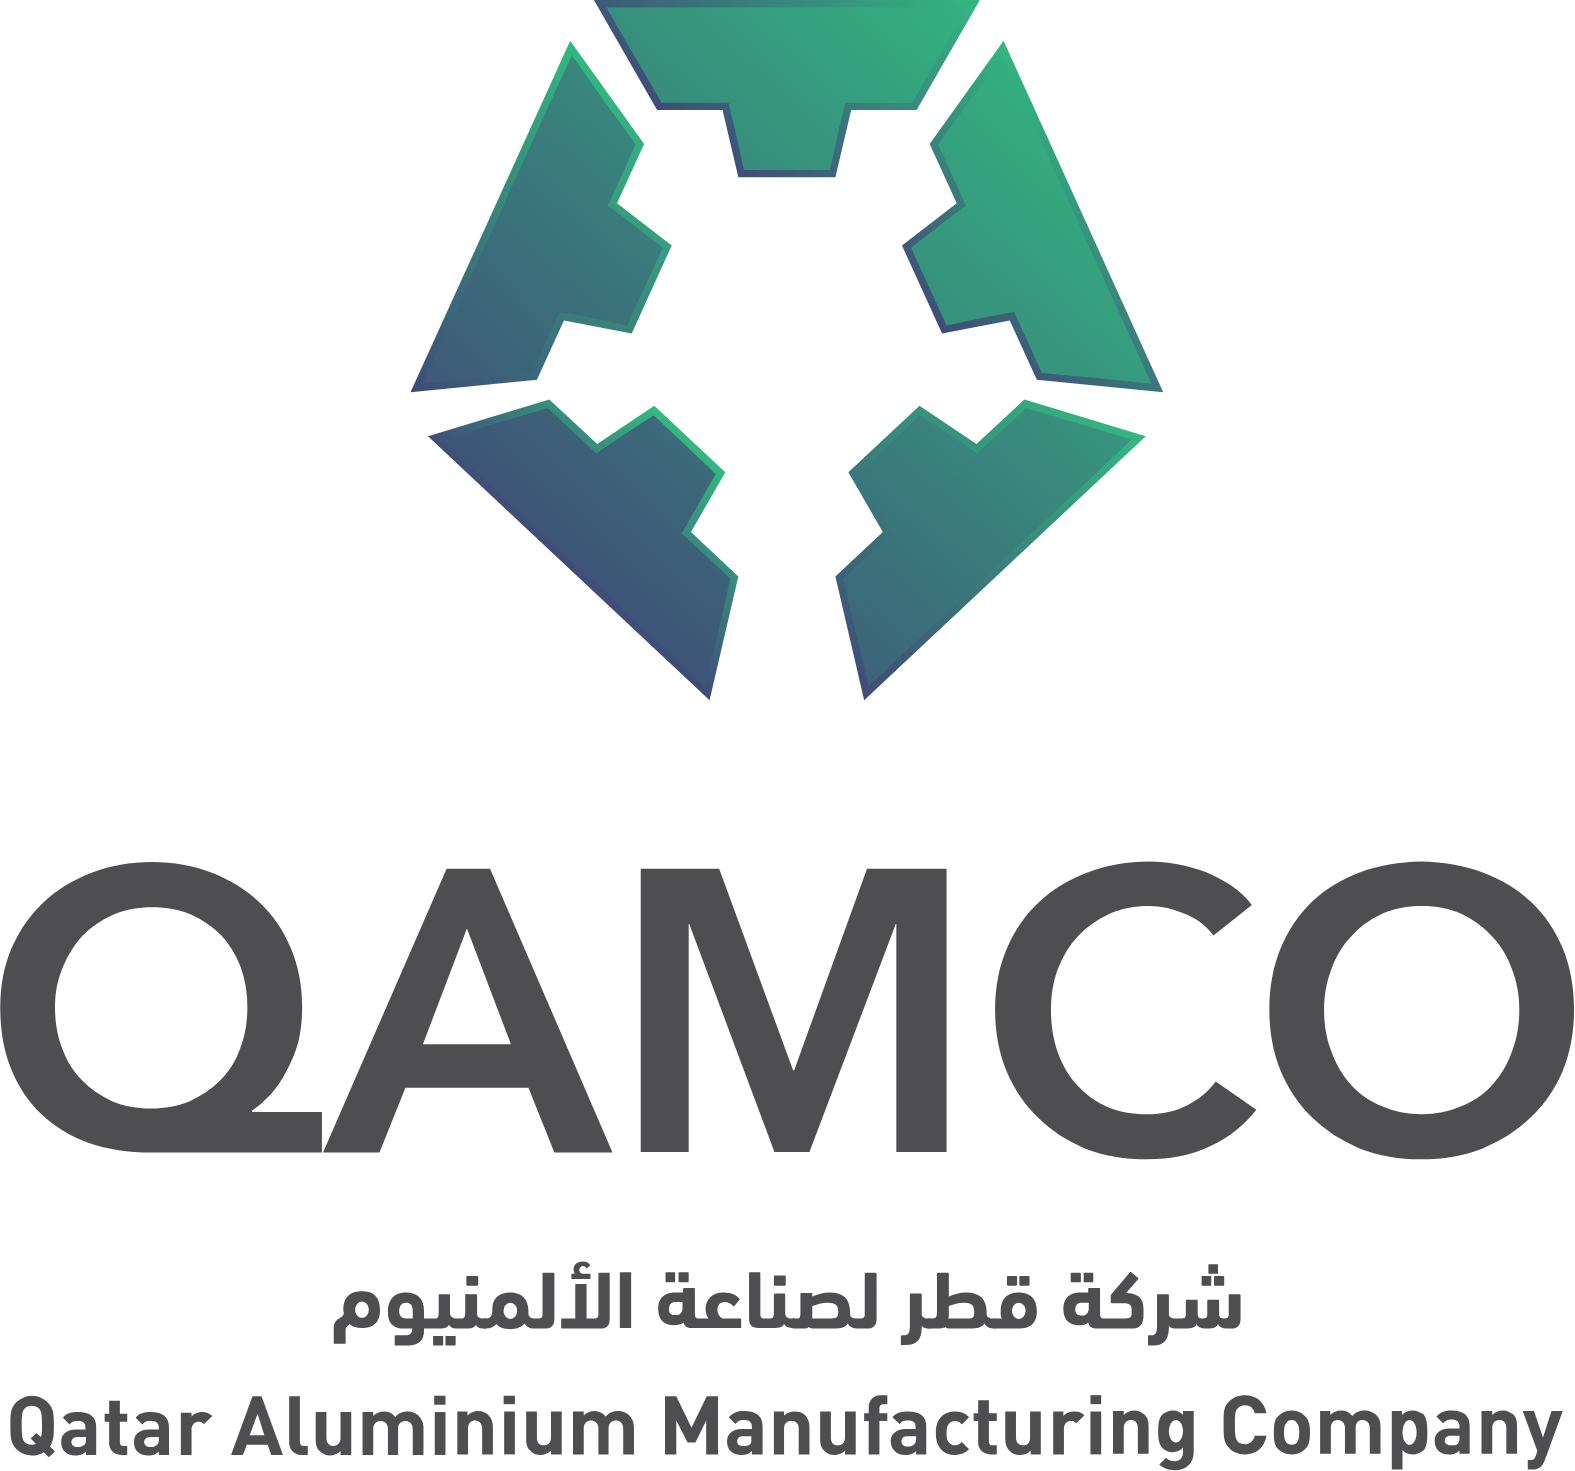 Qatar Aluminium Manufacturing Company logo large (transparent PNG)